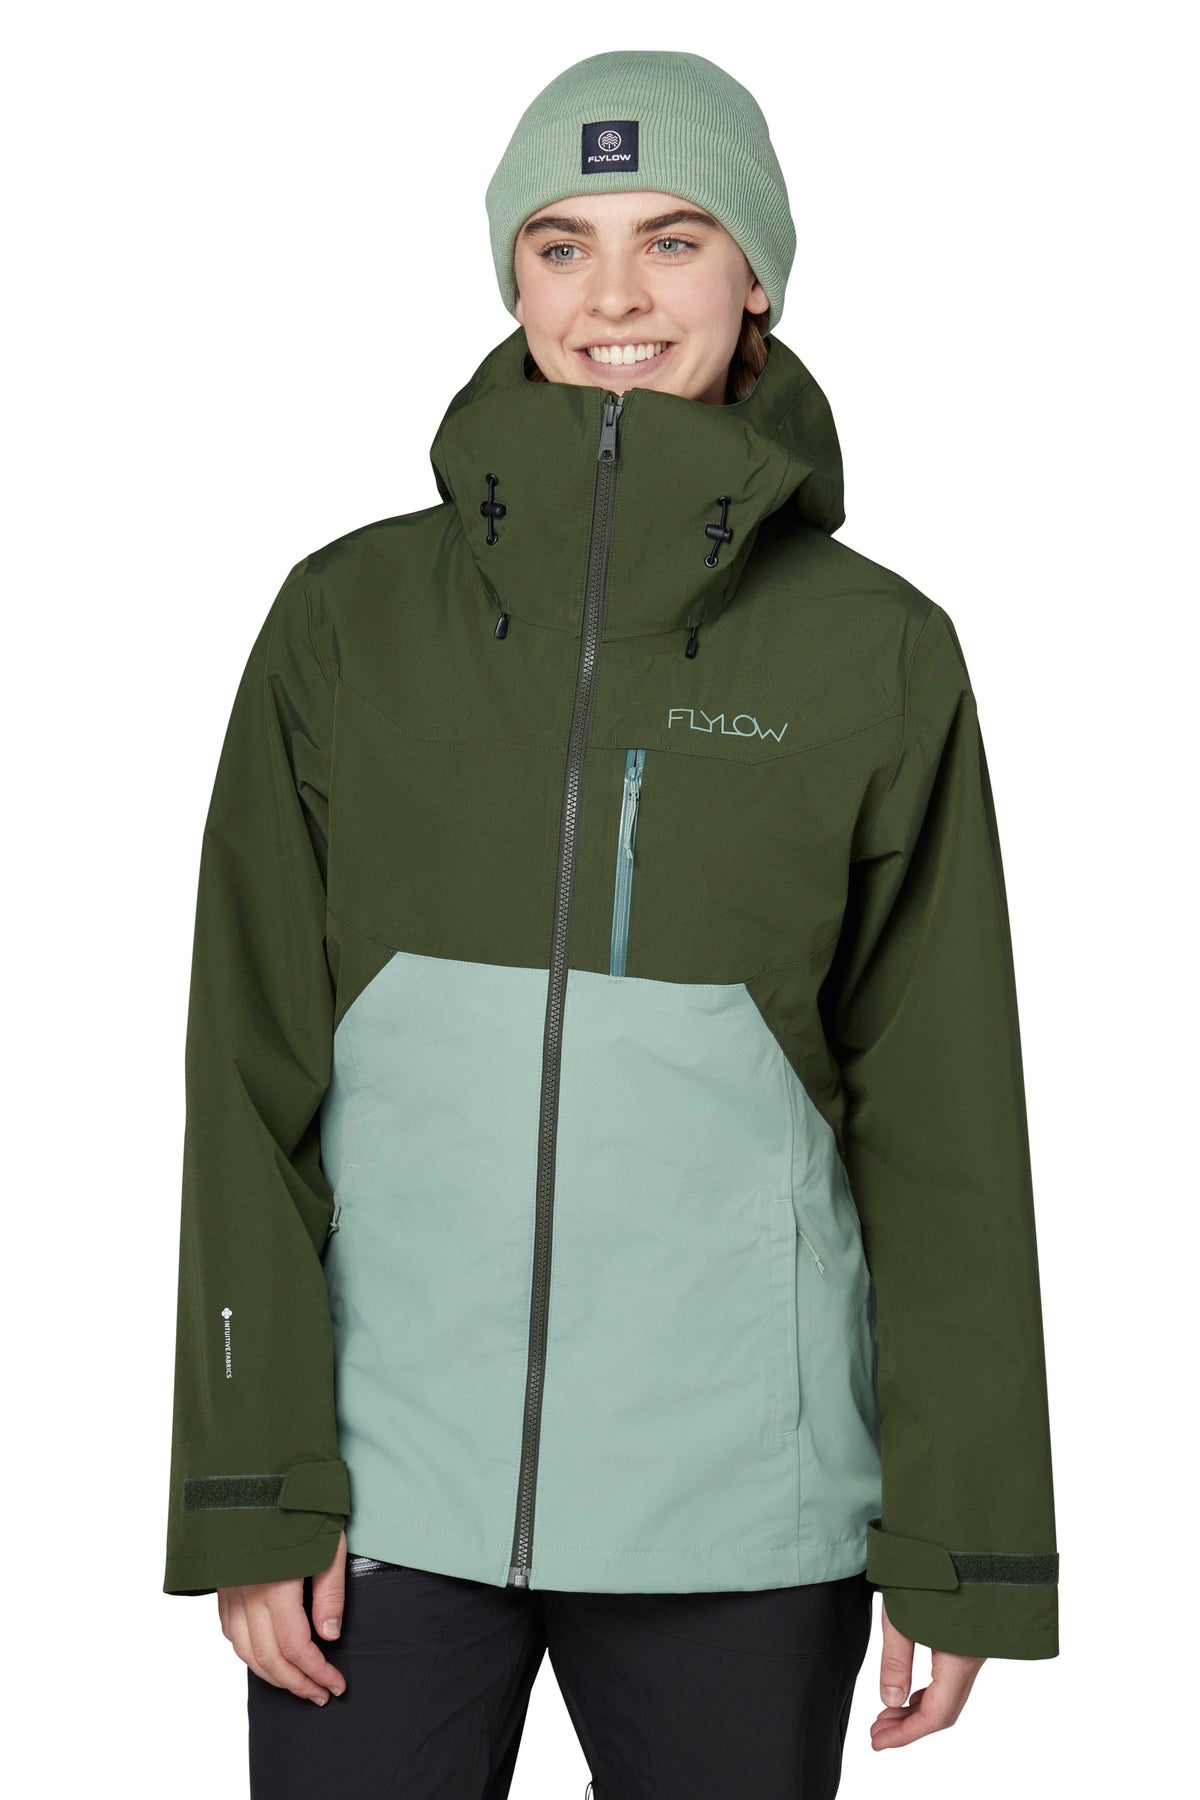 Puma Jacket - Women's Shell Ski Jacket | Flylow – Flylow Gear